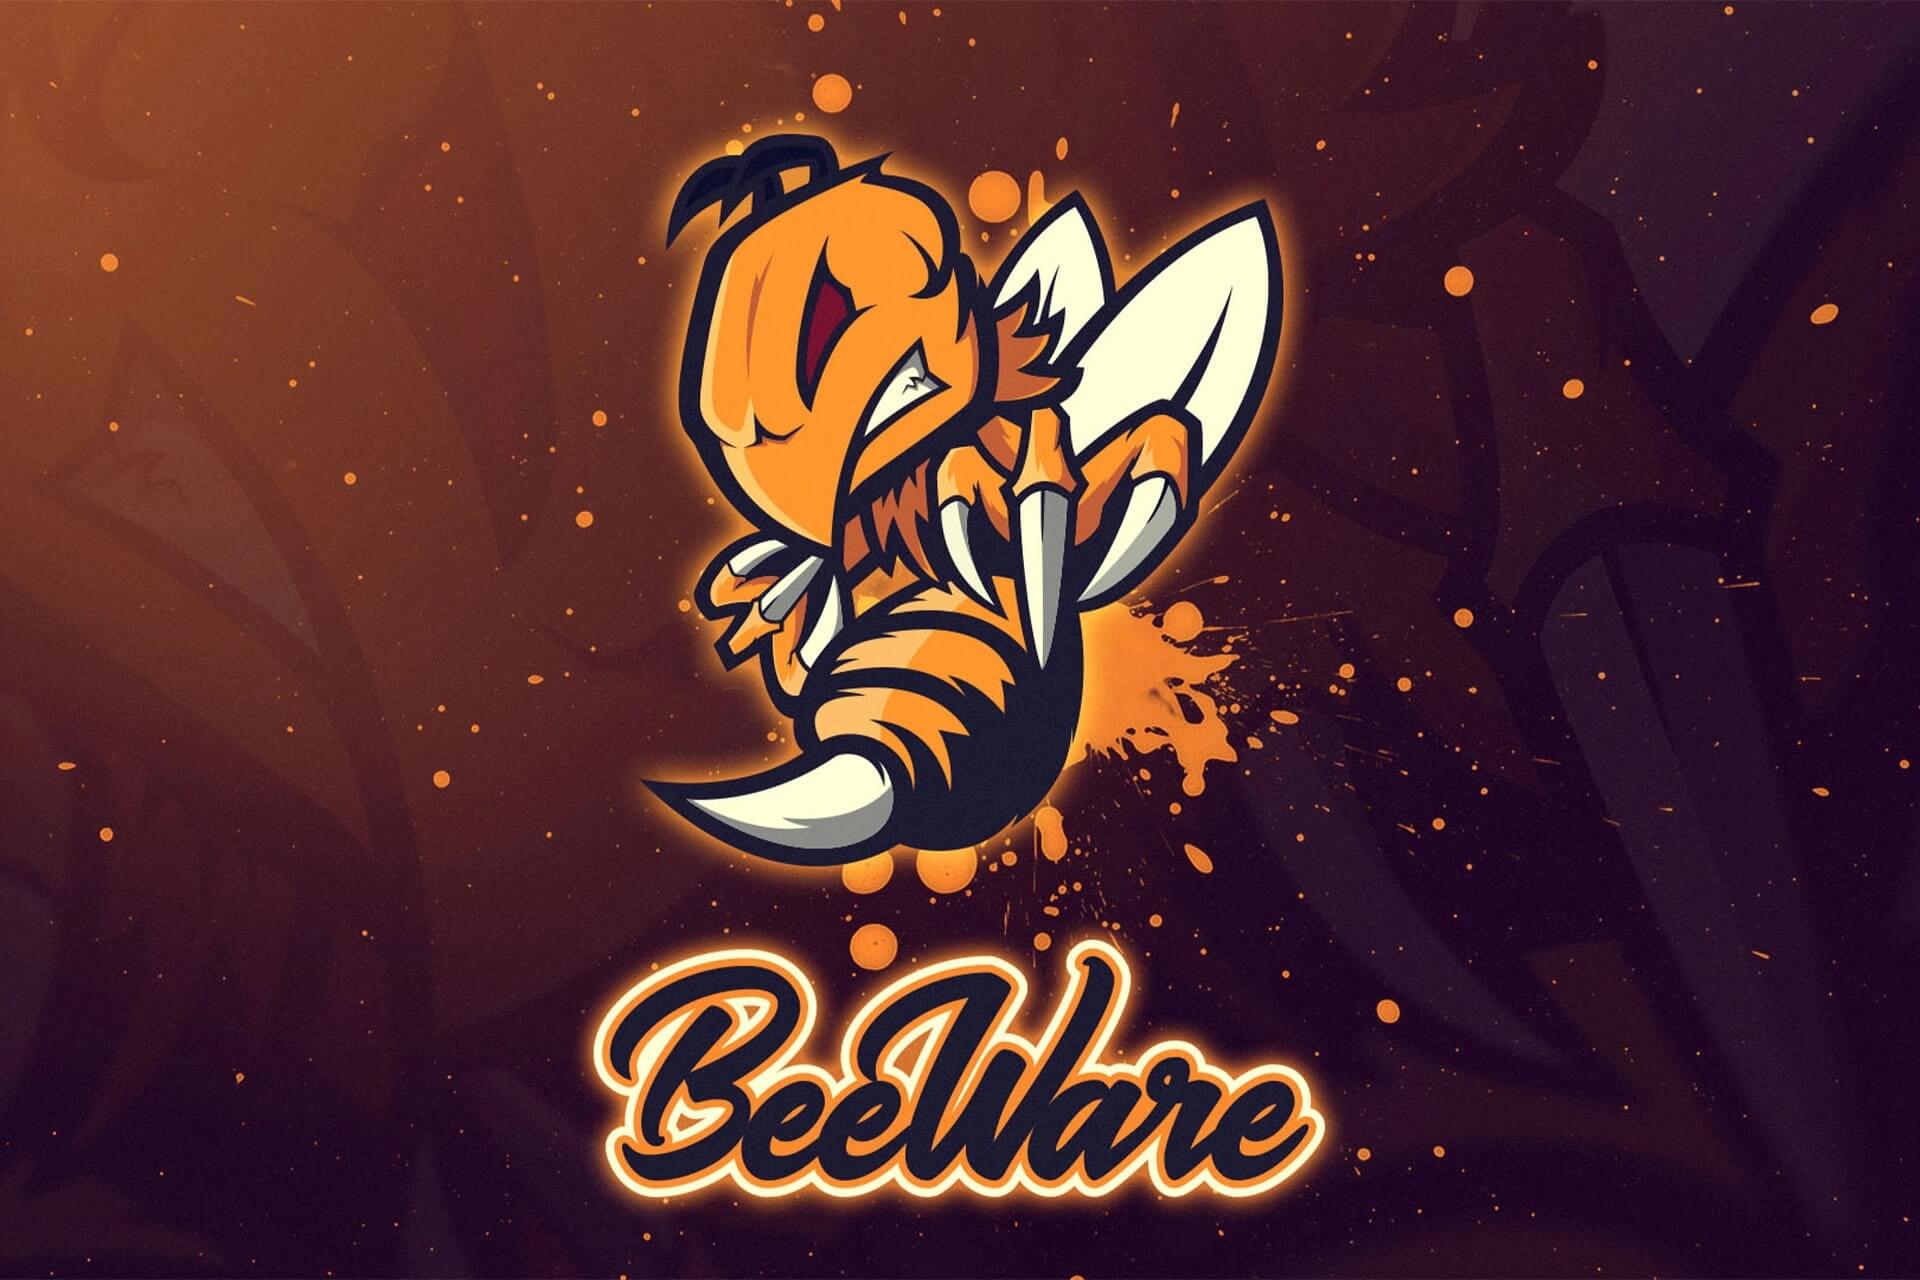 beeware-logo-mascot